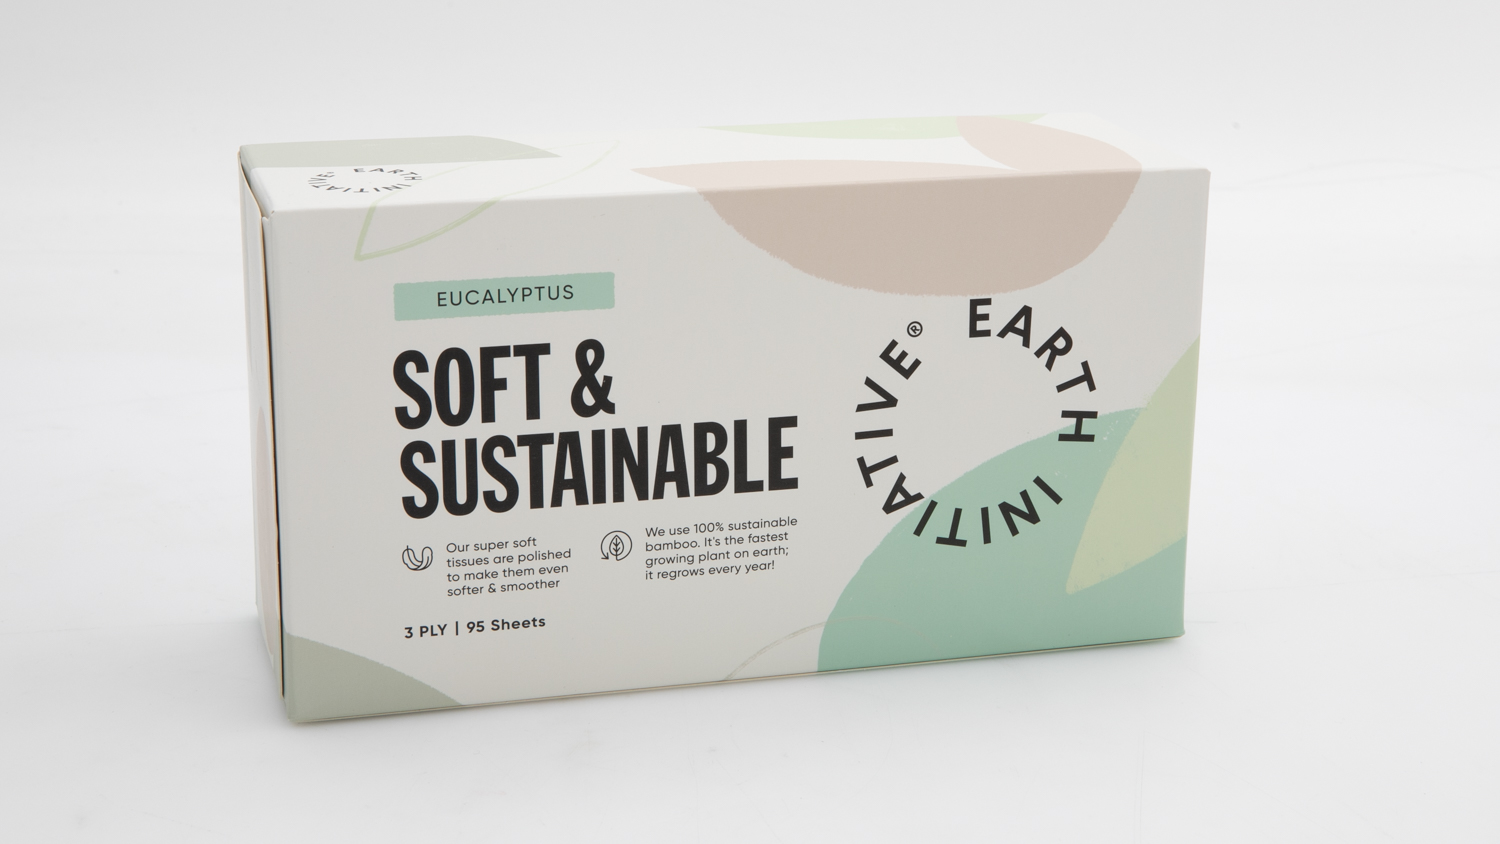 Earth Initiative Soft & Sustainable Eucalyptus 95 sheets carousel image